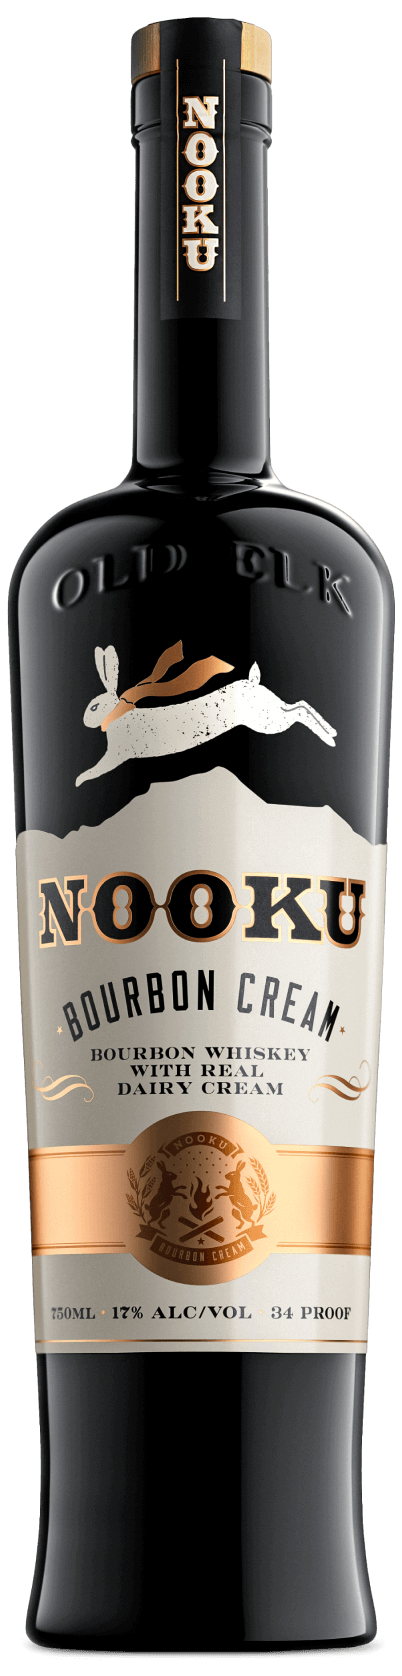 Nooku Bourbon Cream (750ml)